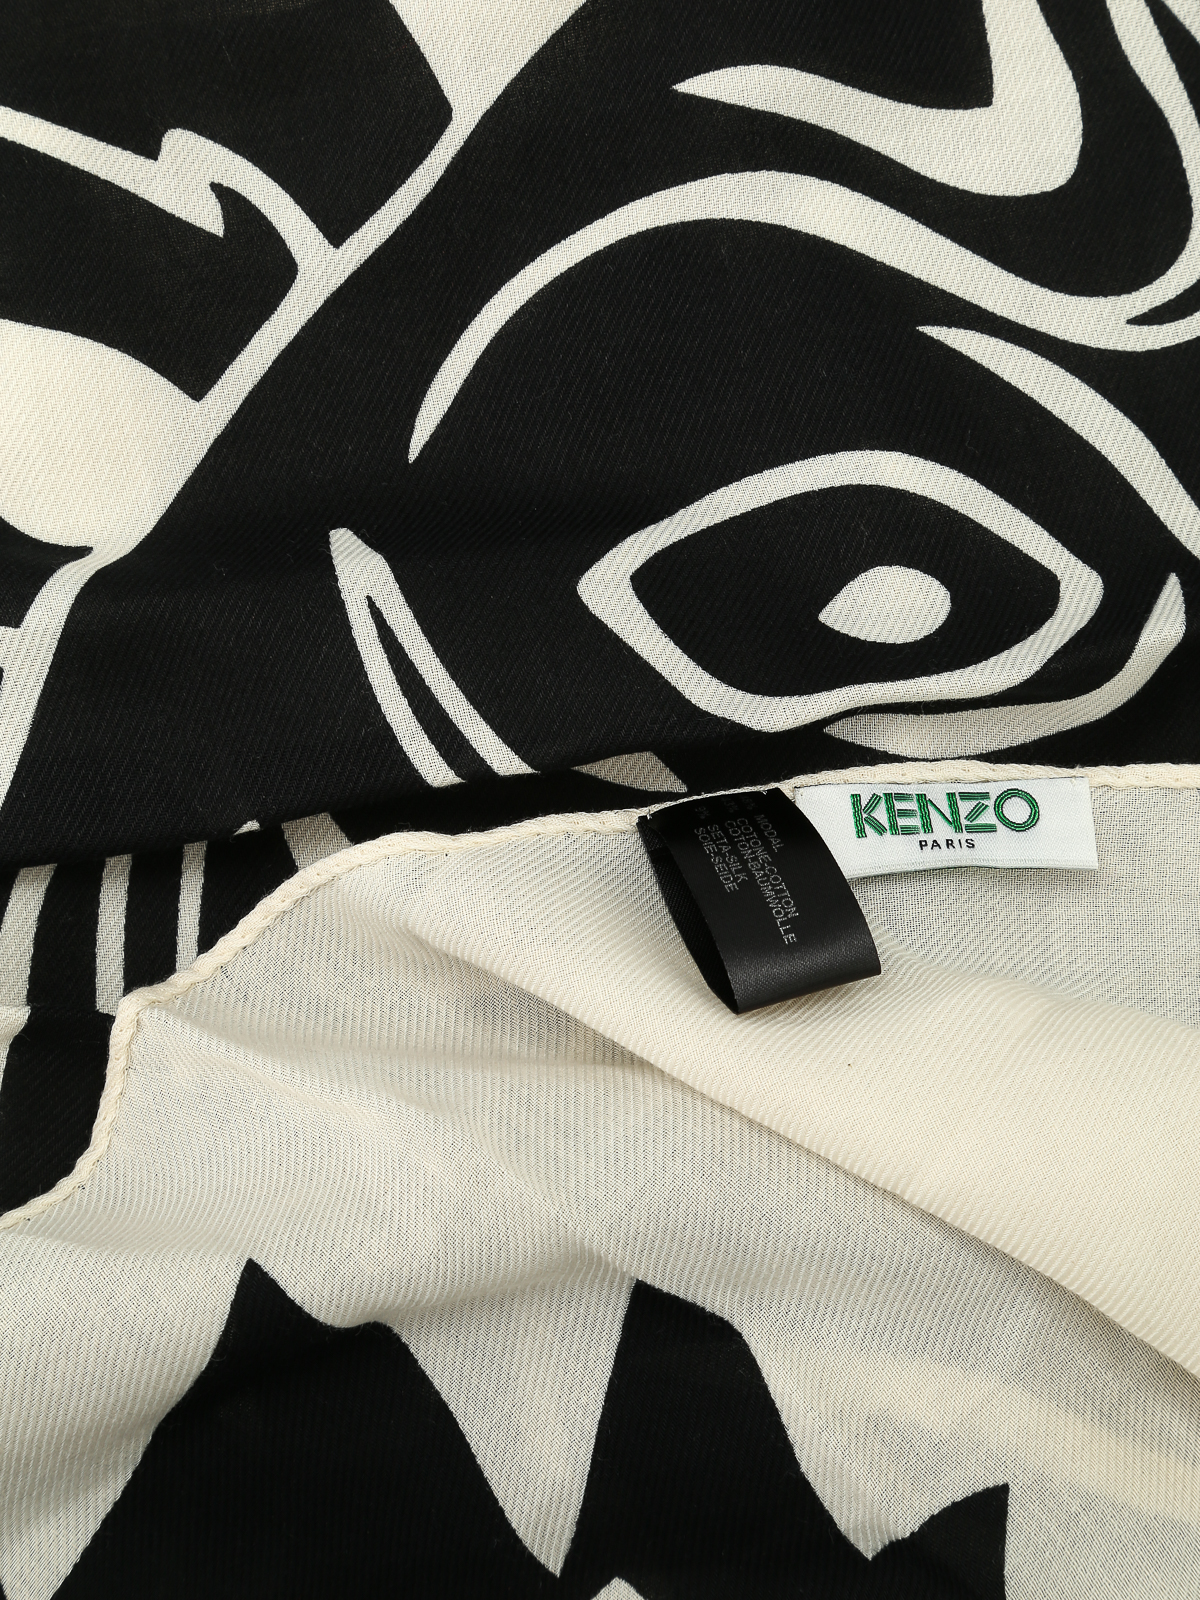 Kenzo - Tiger Head black scarf 